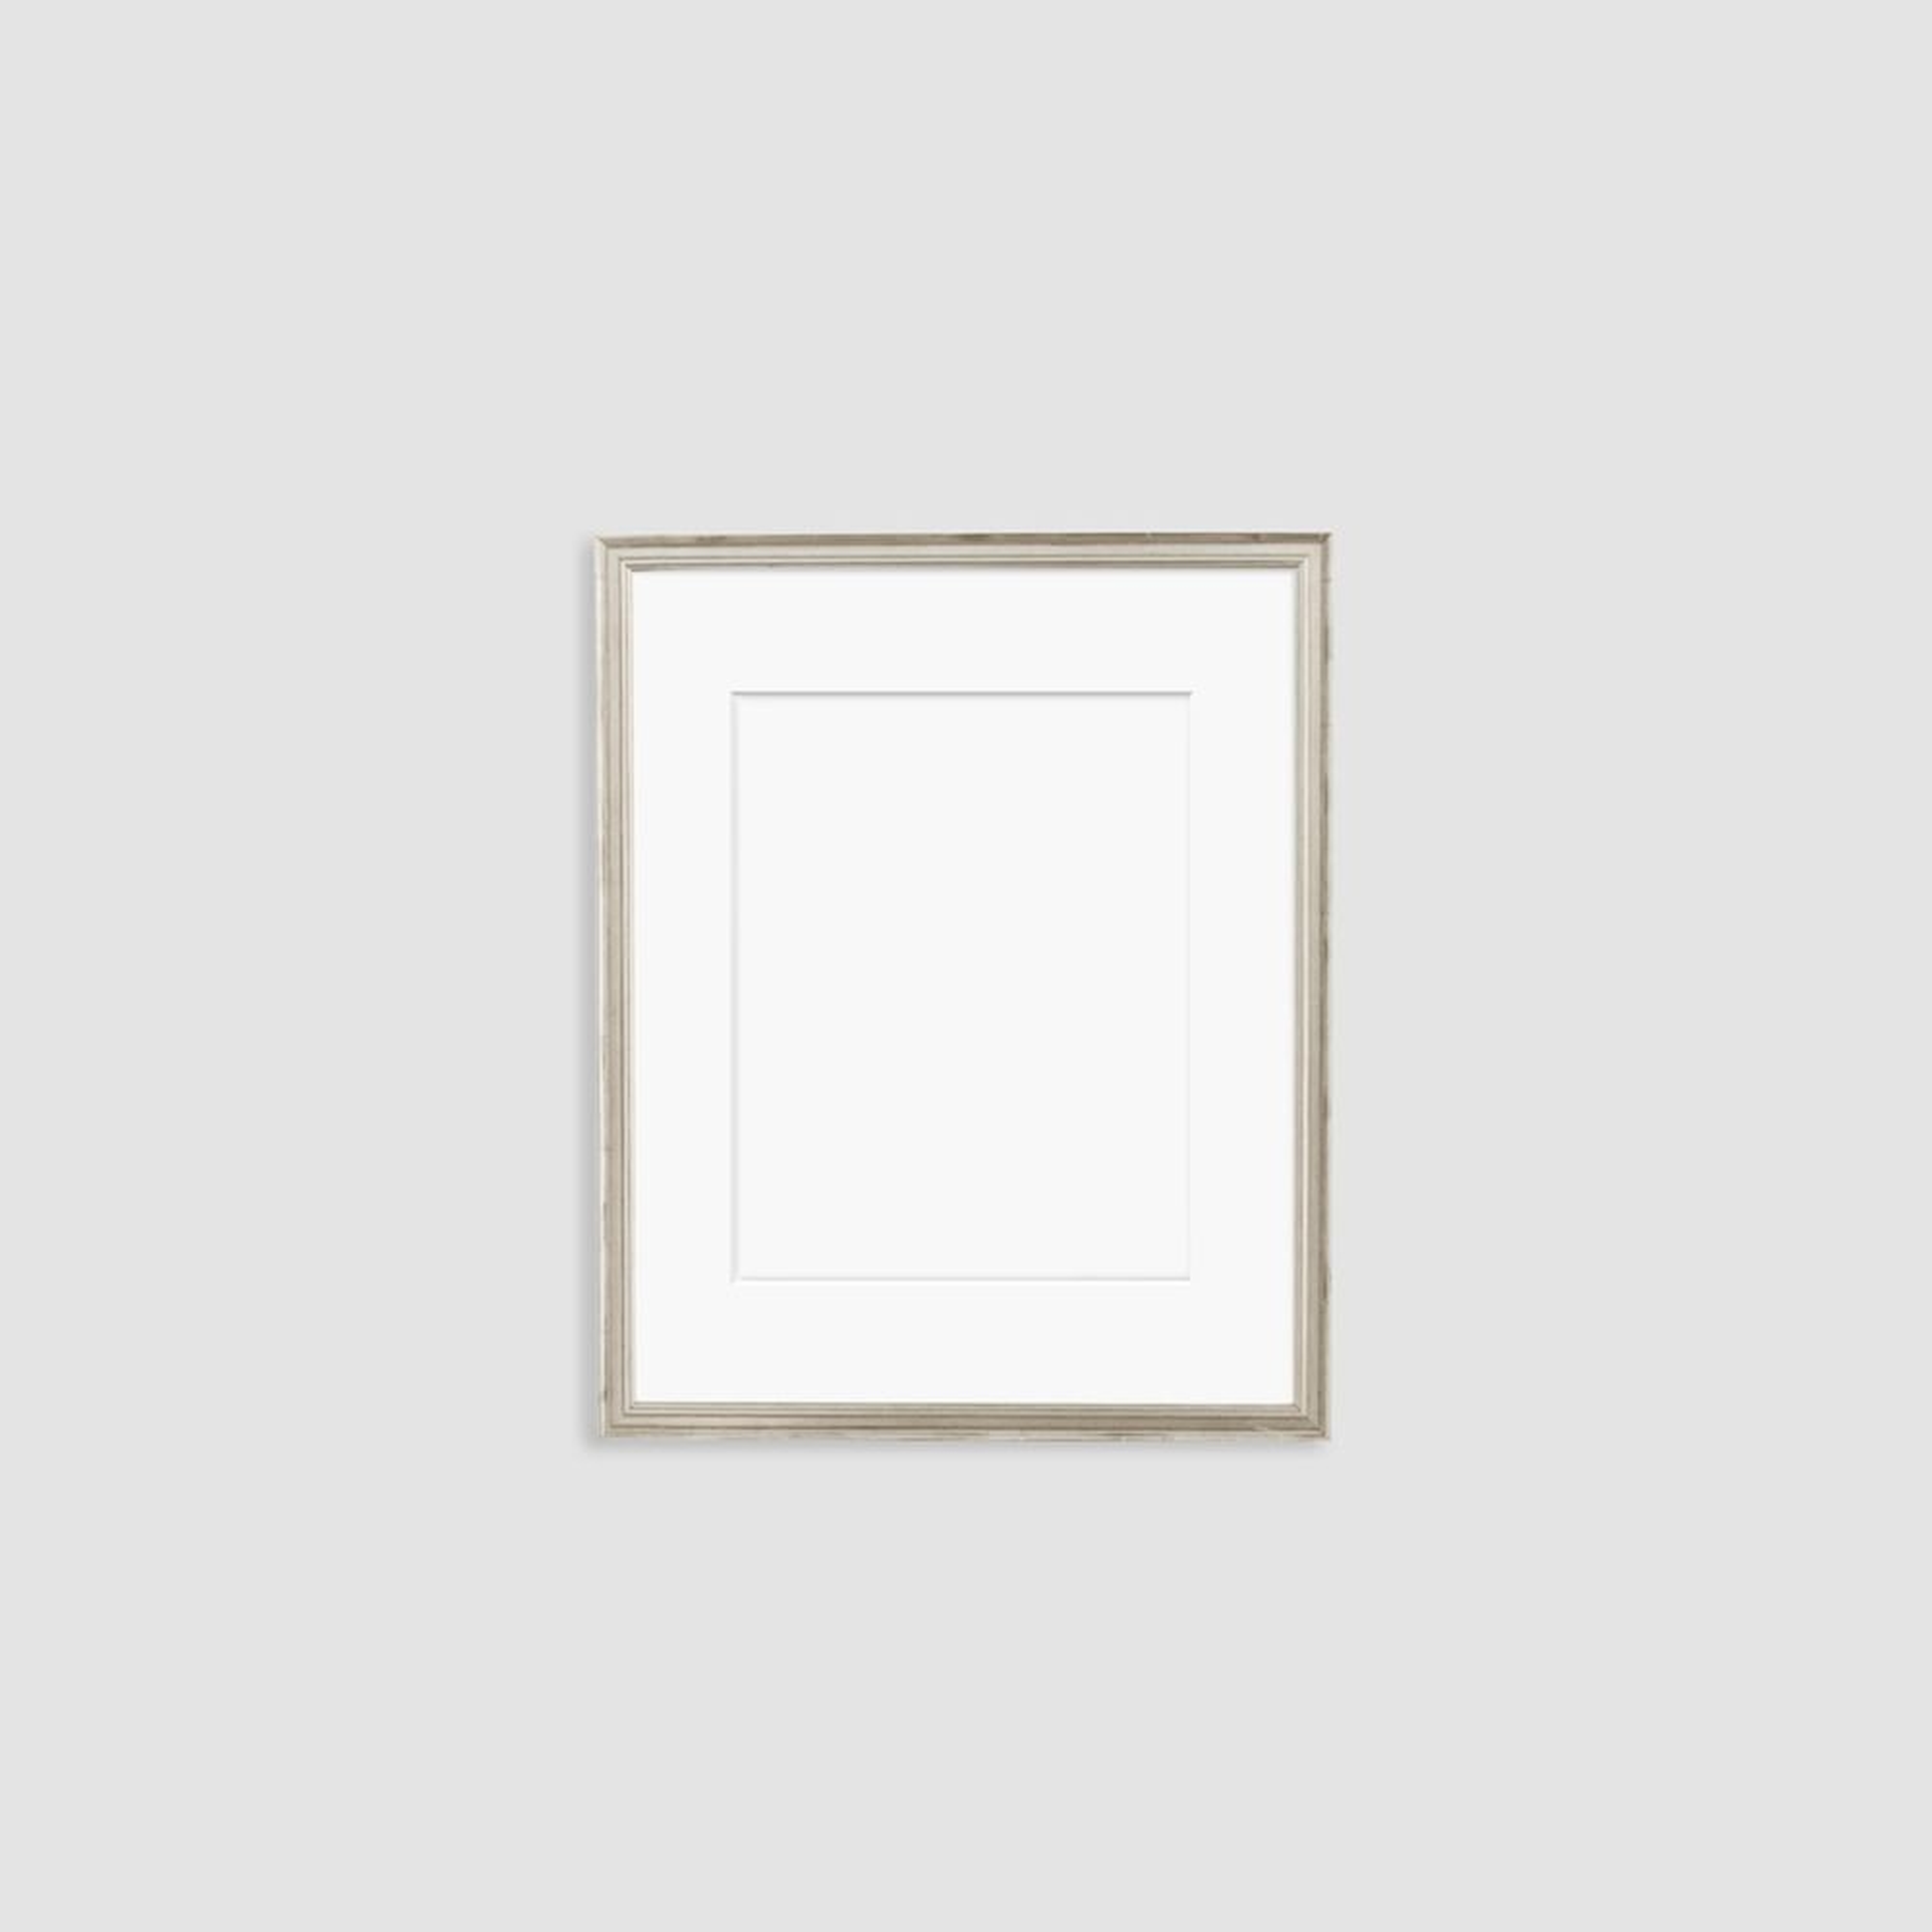 Simply Framed Gallery Frame, Antique Silver/Mat, 16"X20" - West Elm